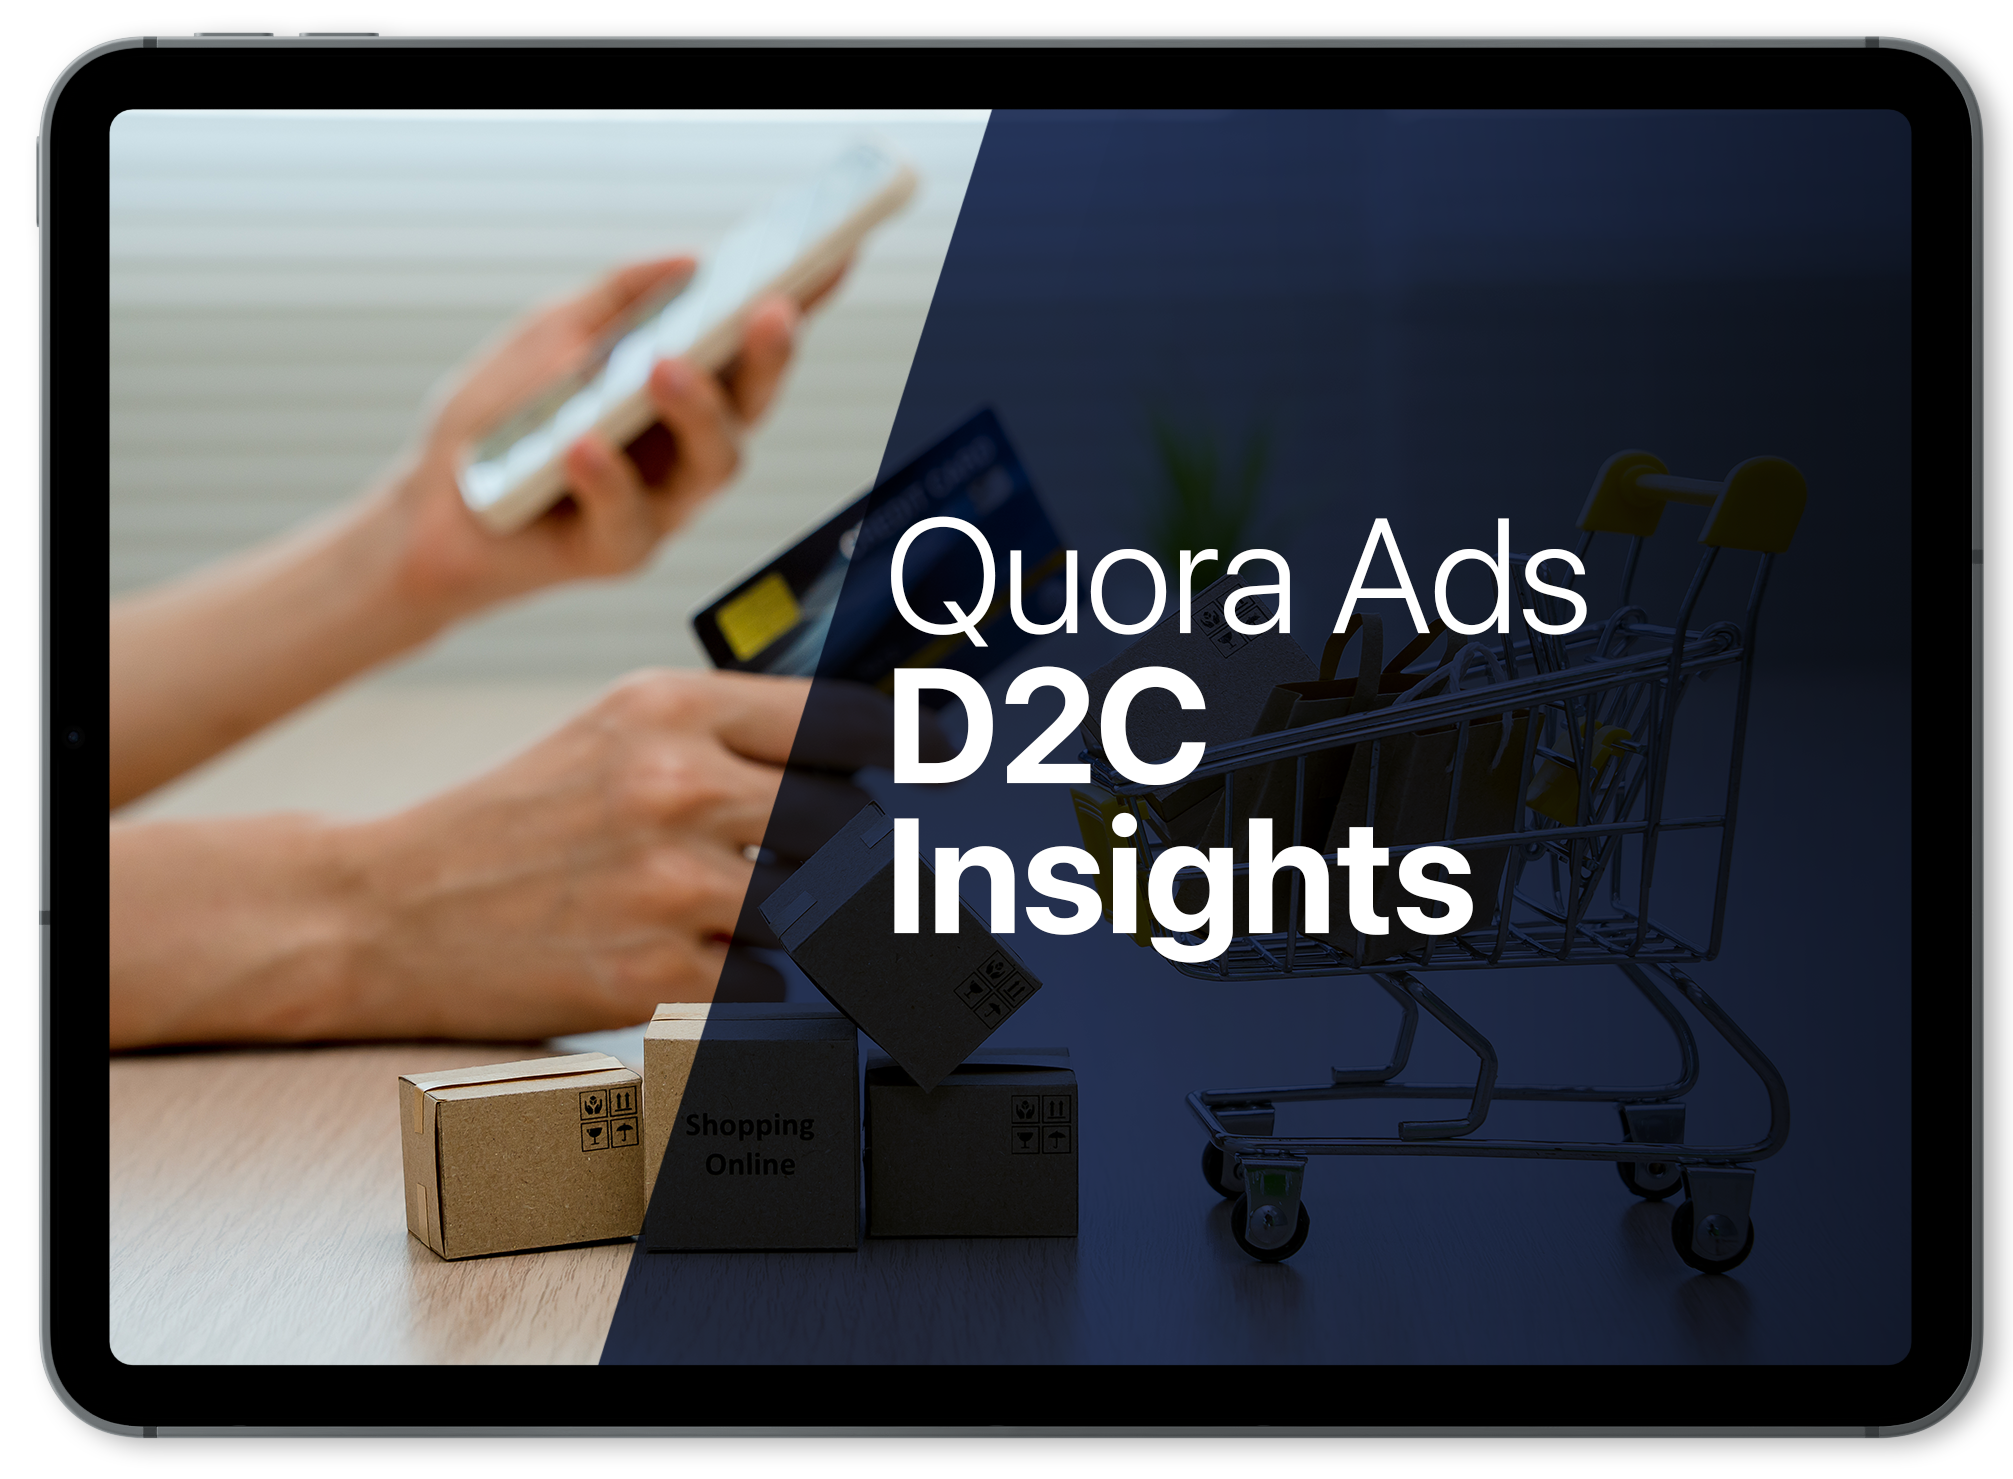 quora ads d2c insights